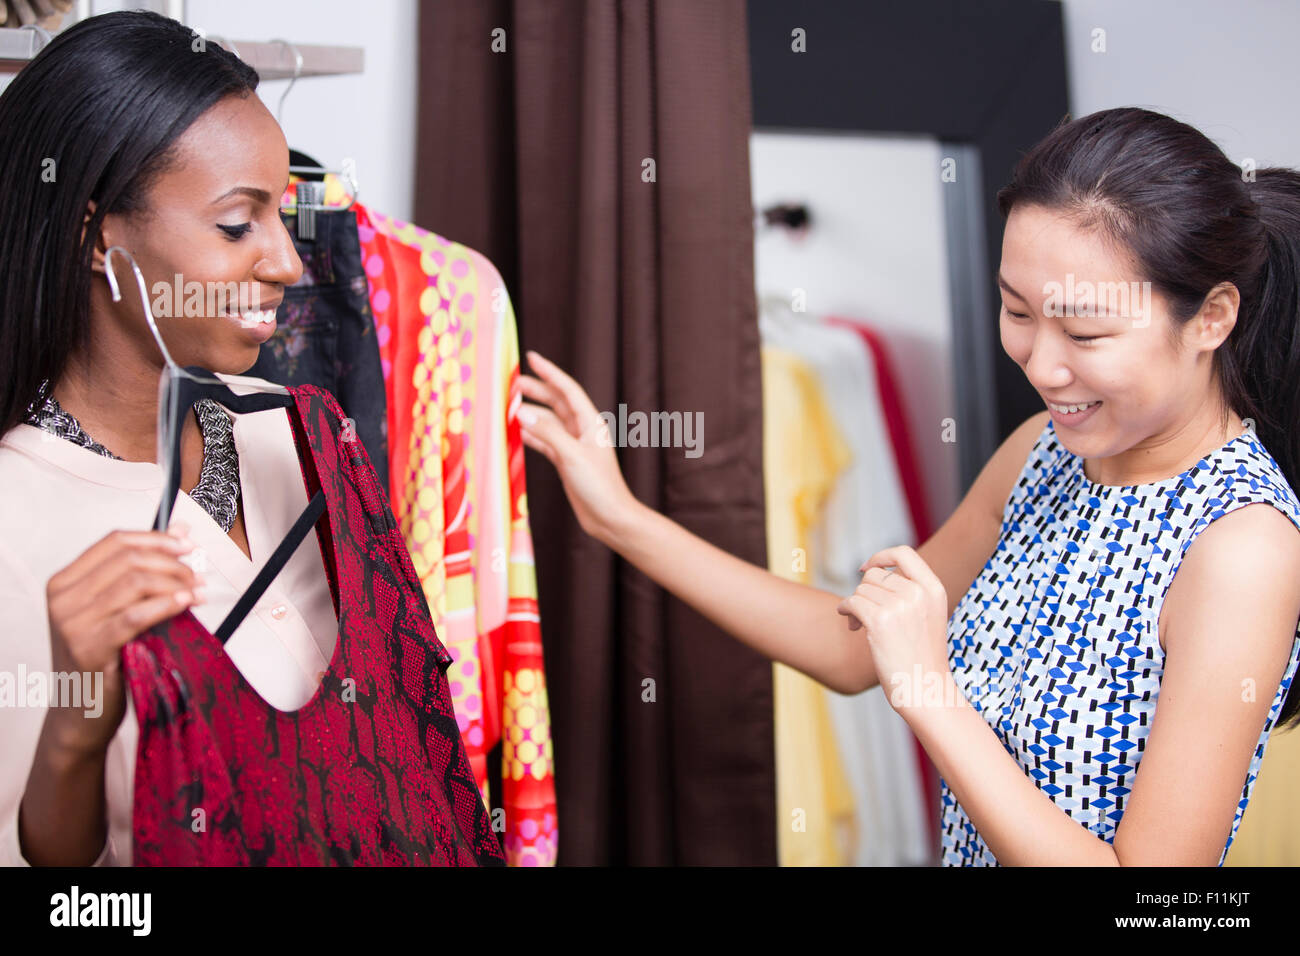 Women shopping in clothing store Stock Photo